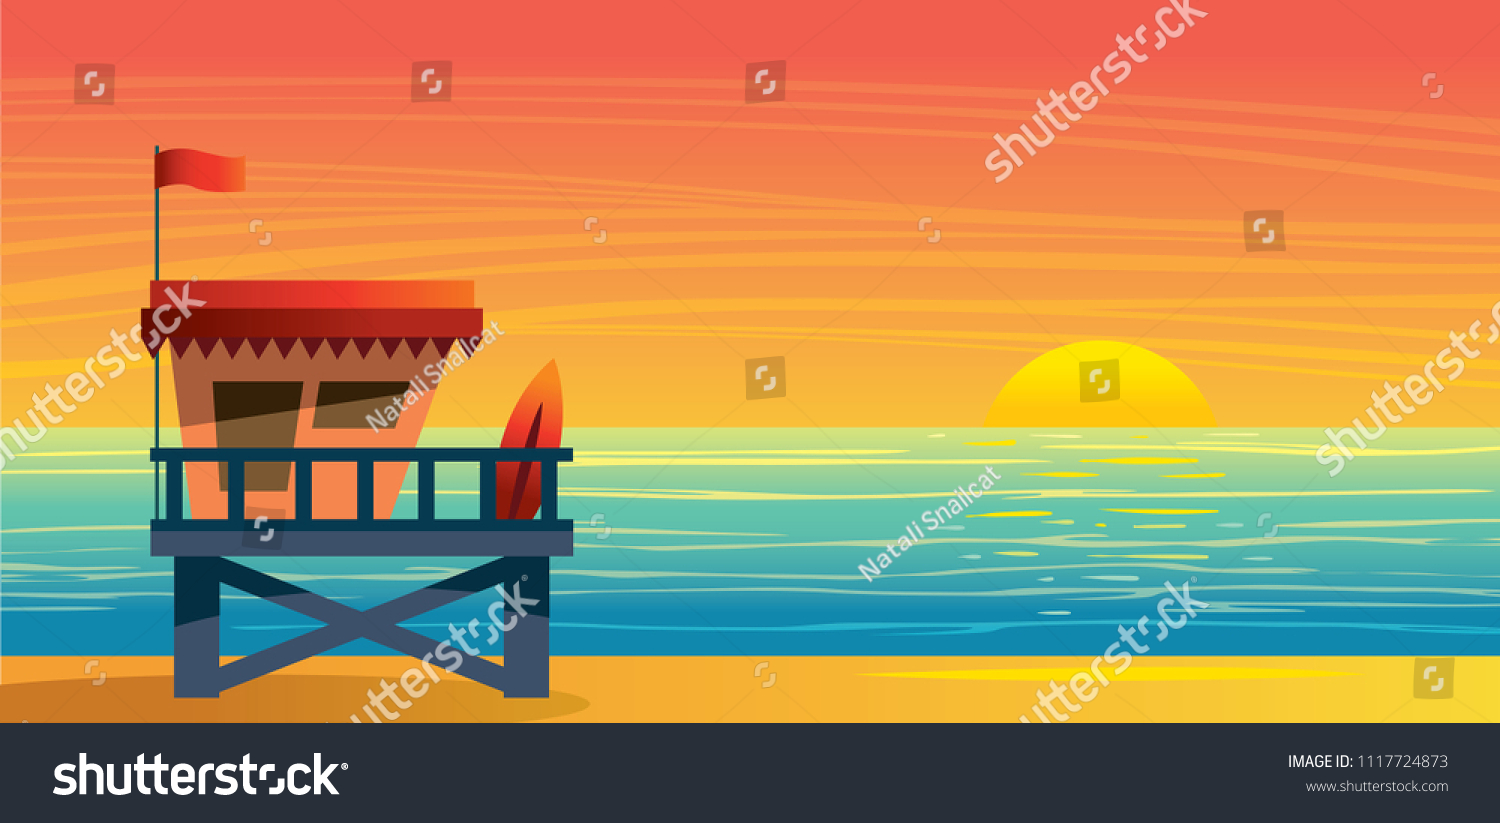 SVG of Summer nature landscape with lifeguard station, blue sea and sun on a sunset sky. Vecor illustration. svg